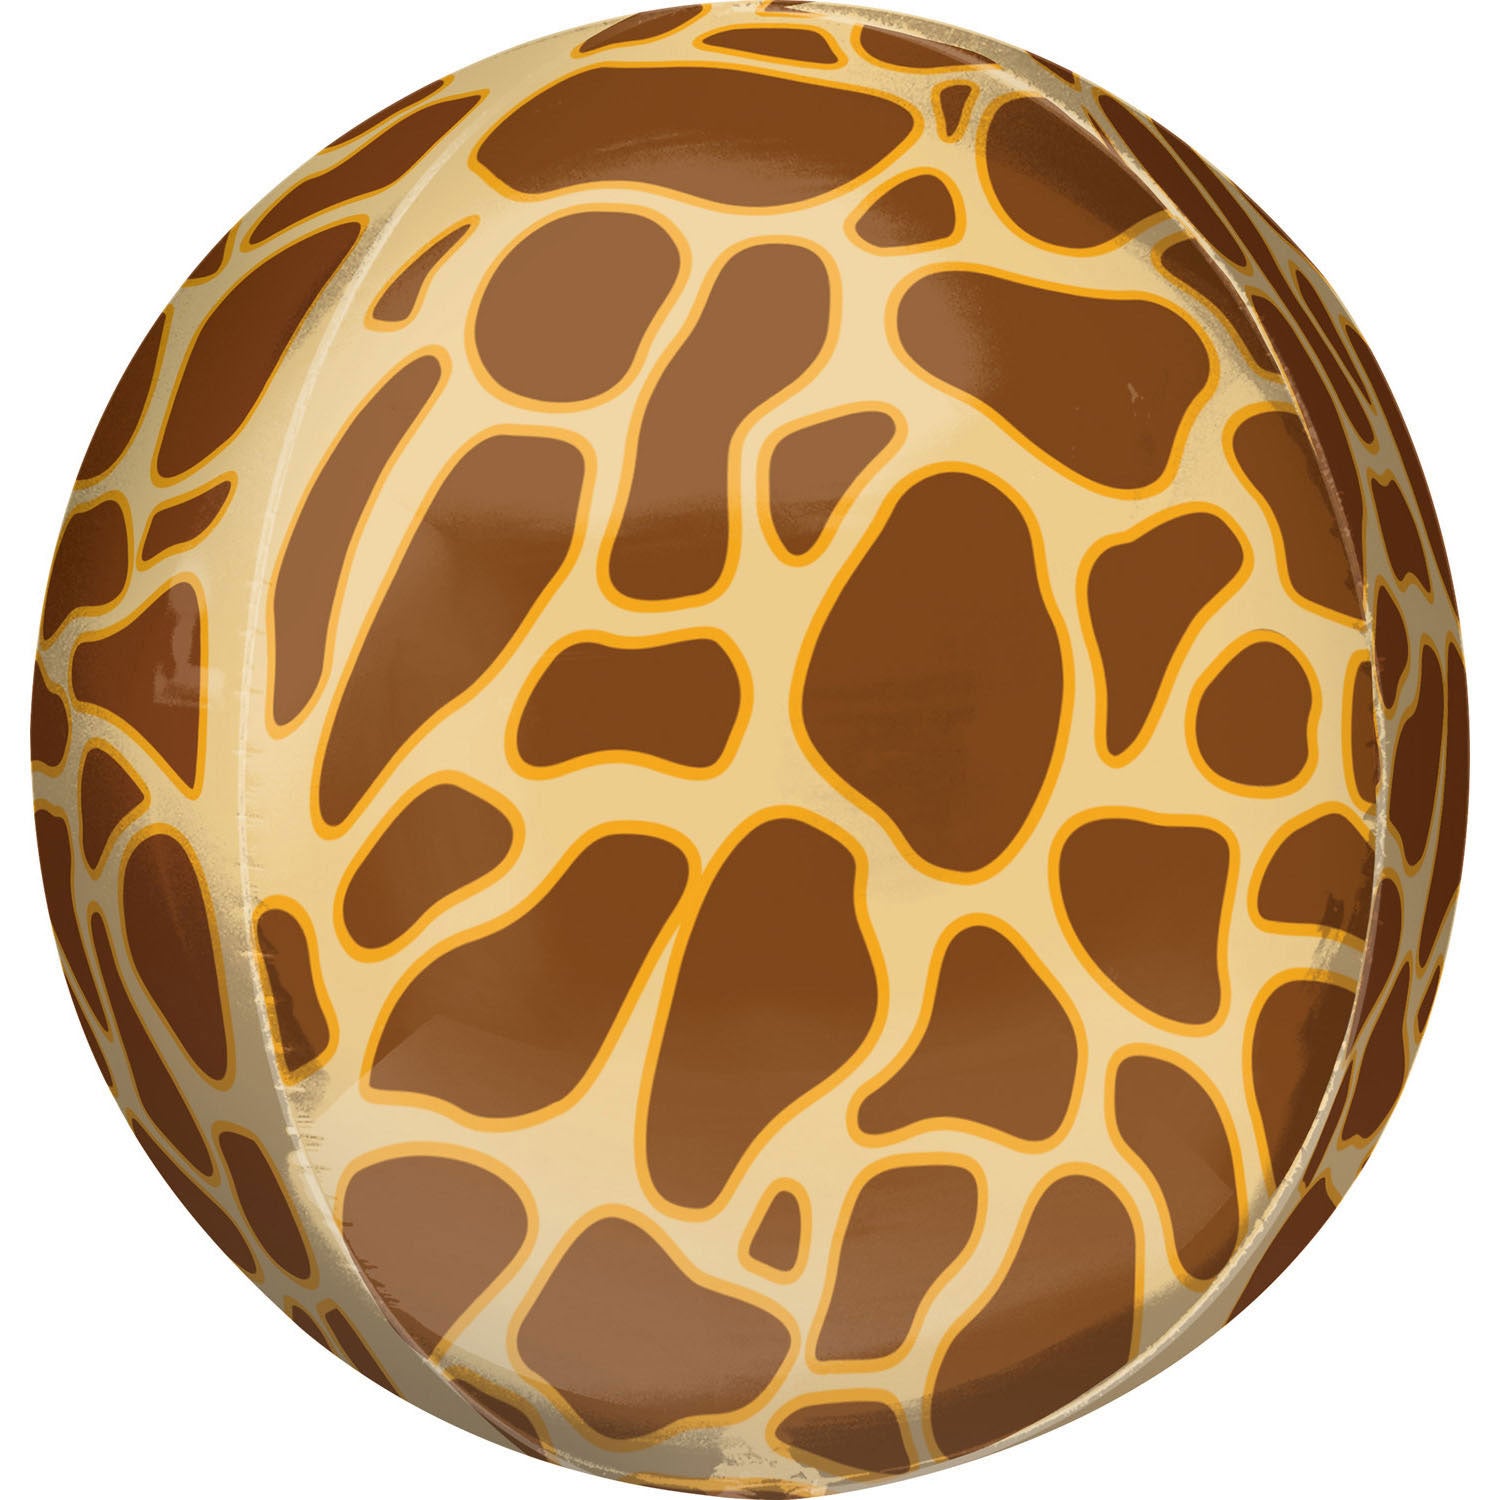 Spherical balloon with giraffe skin design